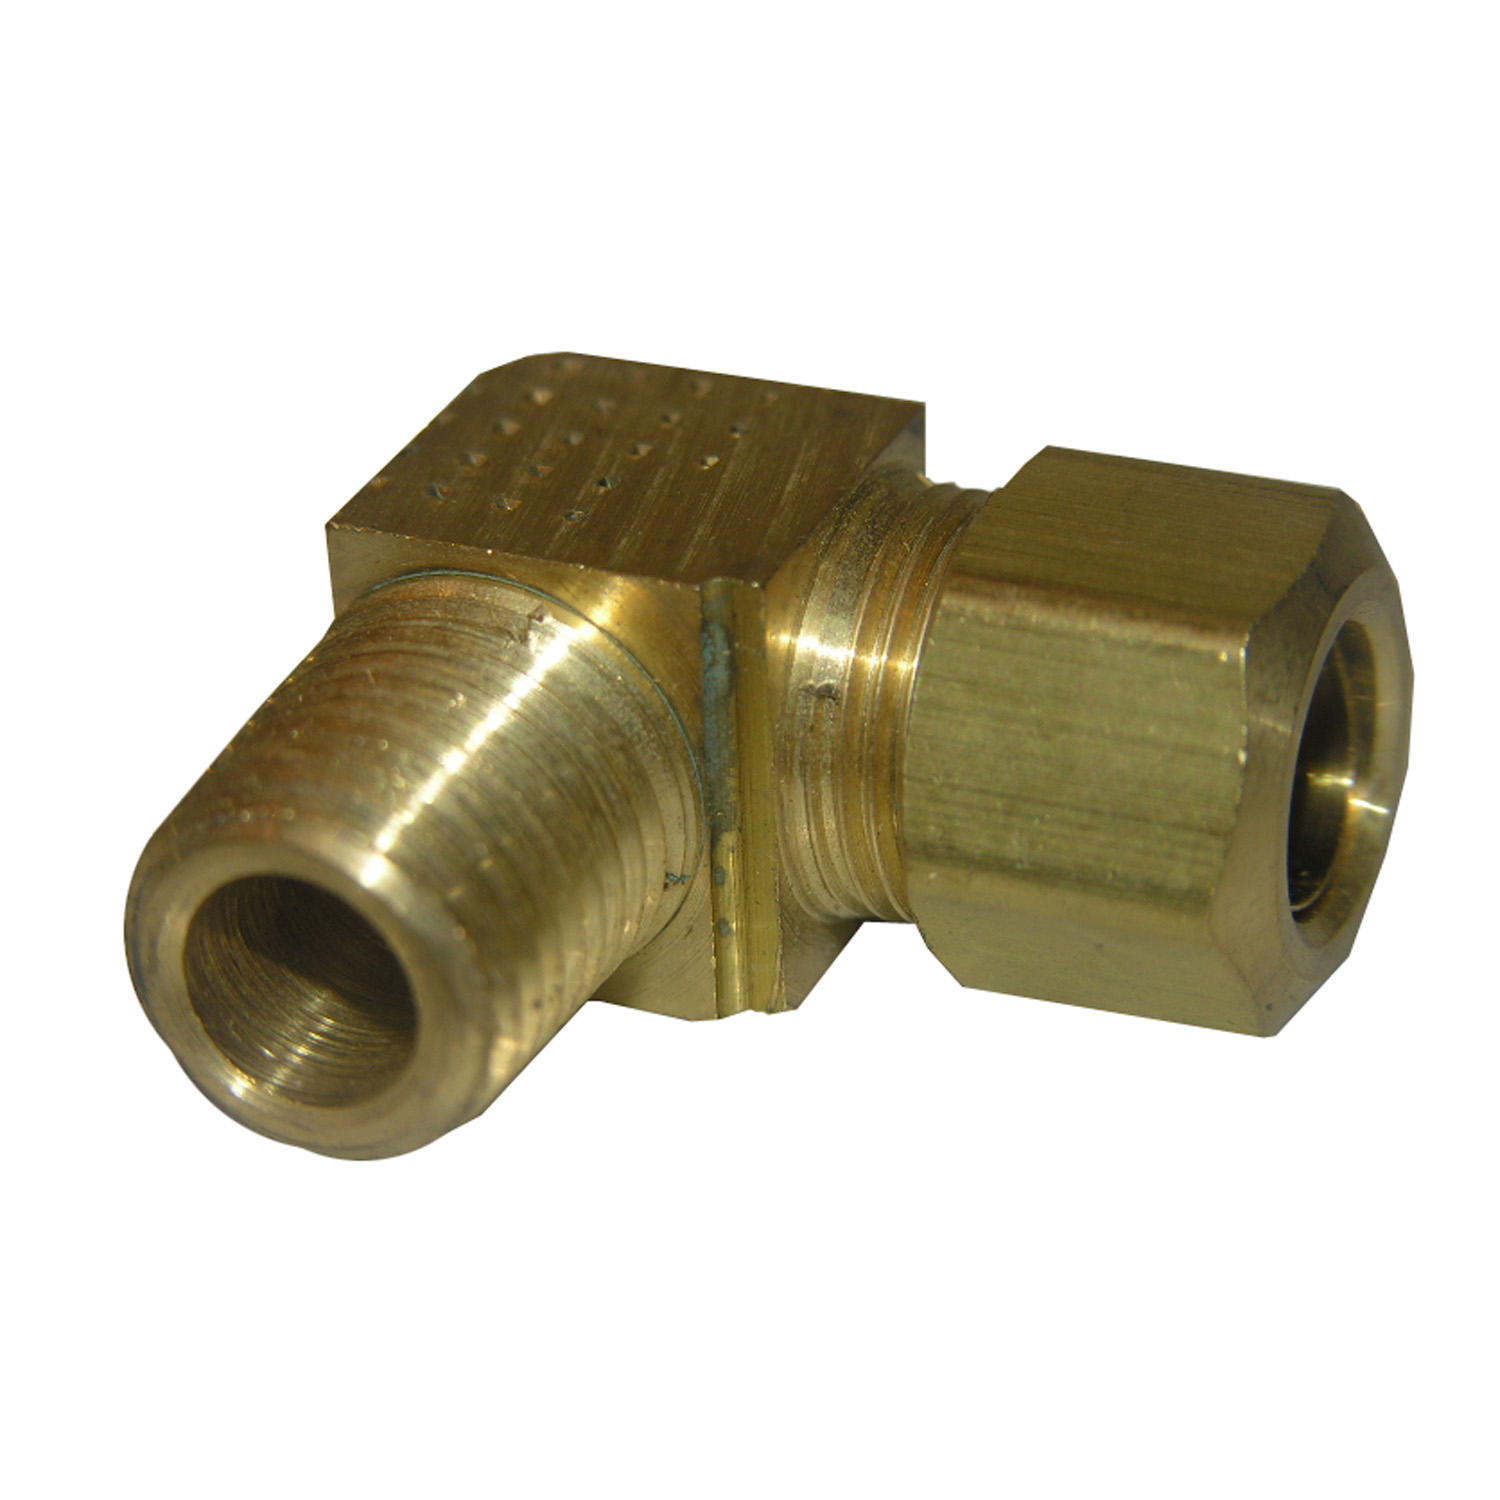 17-6929 Pipe Elbow, 3/8 x 1/4 in, Compression x MIP, 90 deg Angle, Brass, 150 psi Pressure